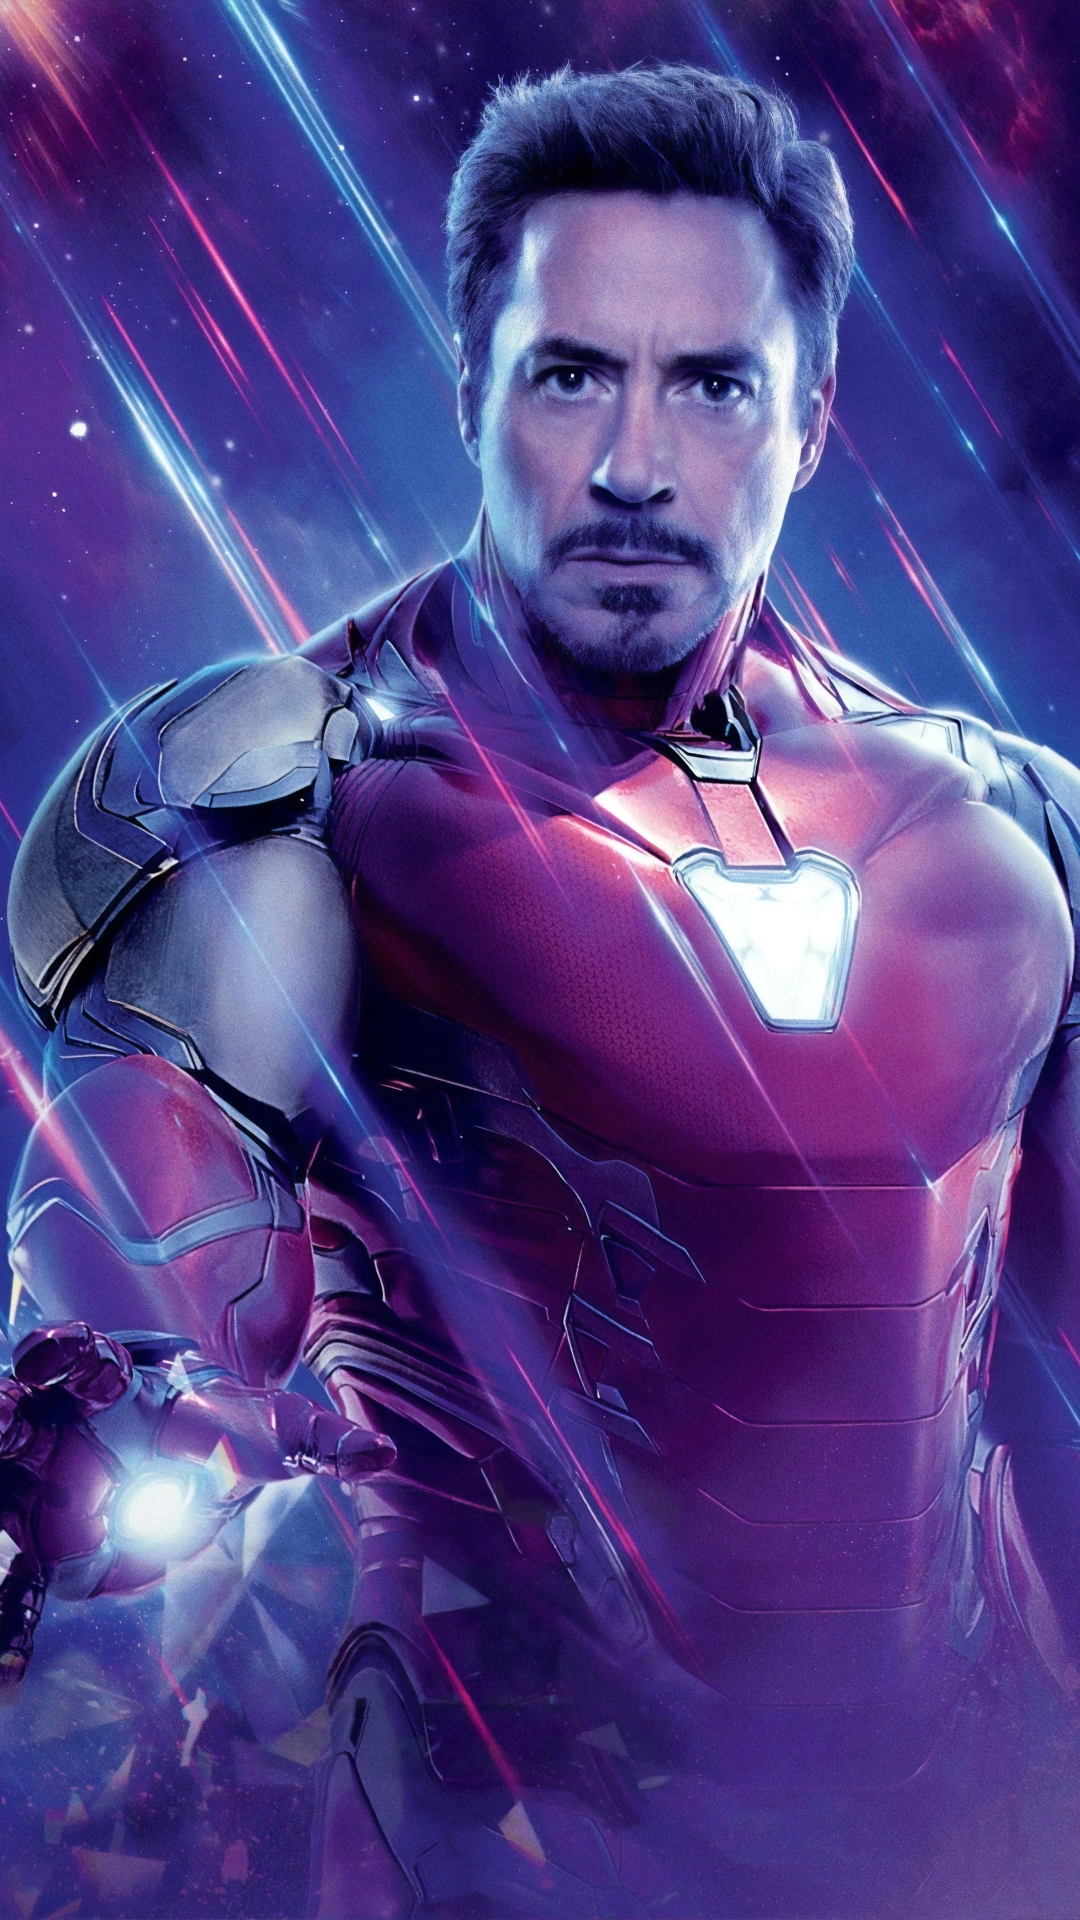 1080x1920 Iron Man In Avengers Endgame Iphone 7 6s 6 Plus